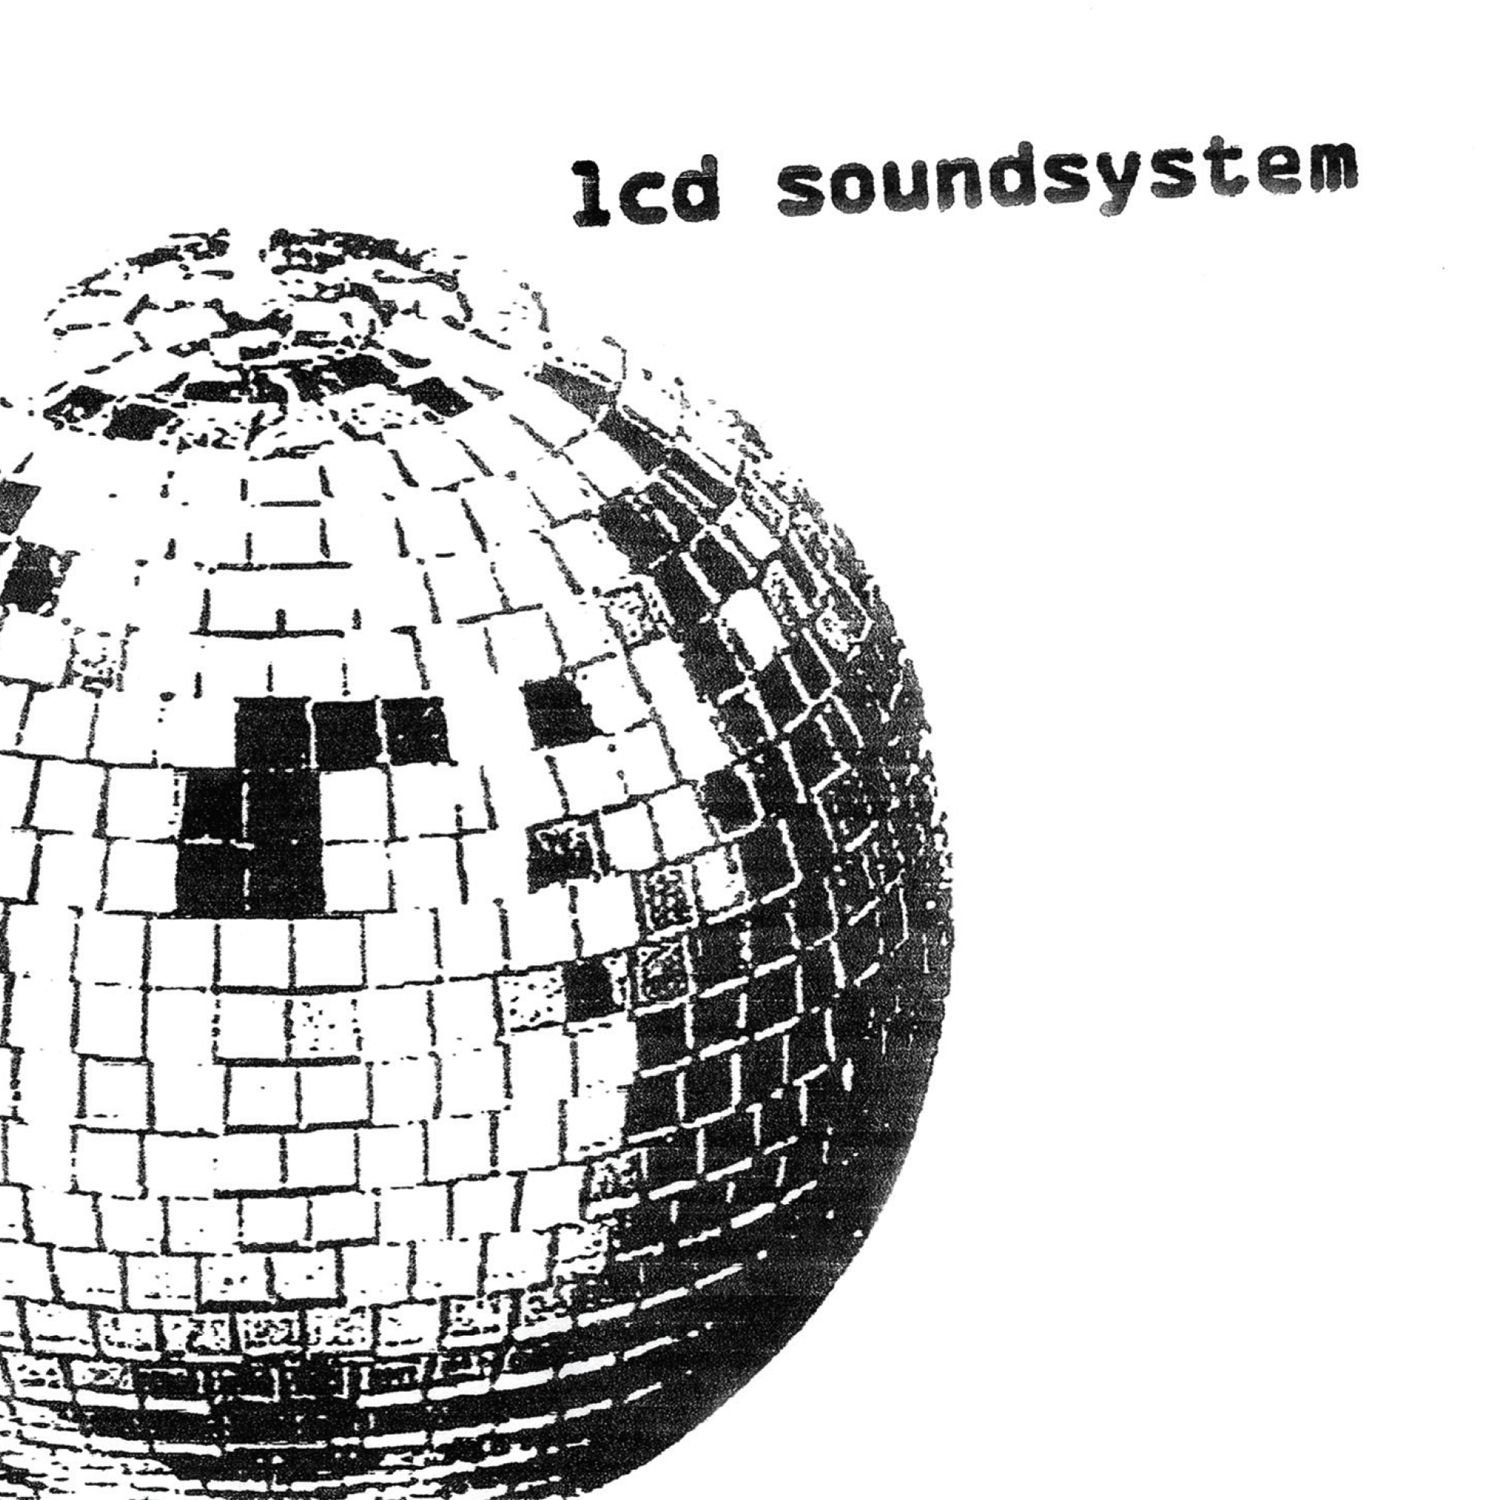 LCD Soundsystem "LCD Soudsystem" LP